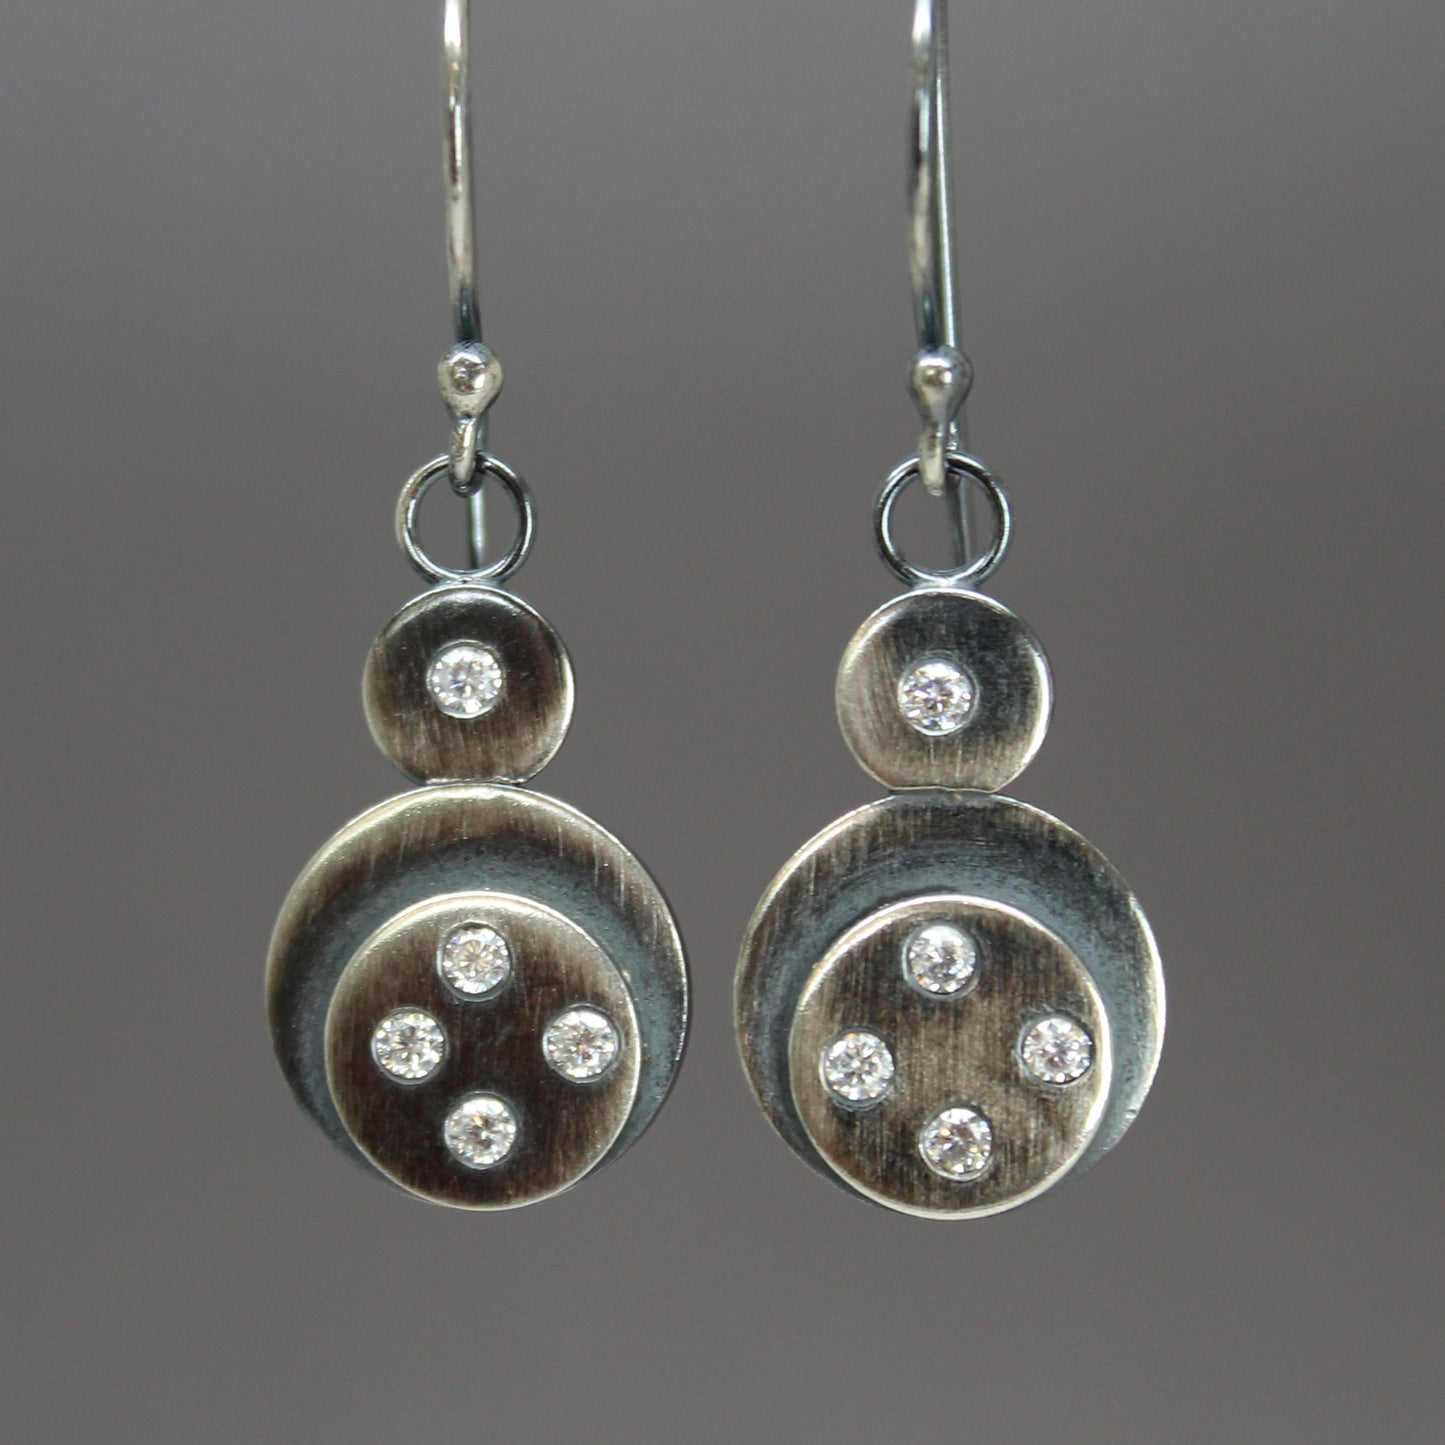 Handmade Cubic Zirconia Gemstone Earrings in Sterling Silver